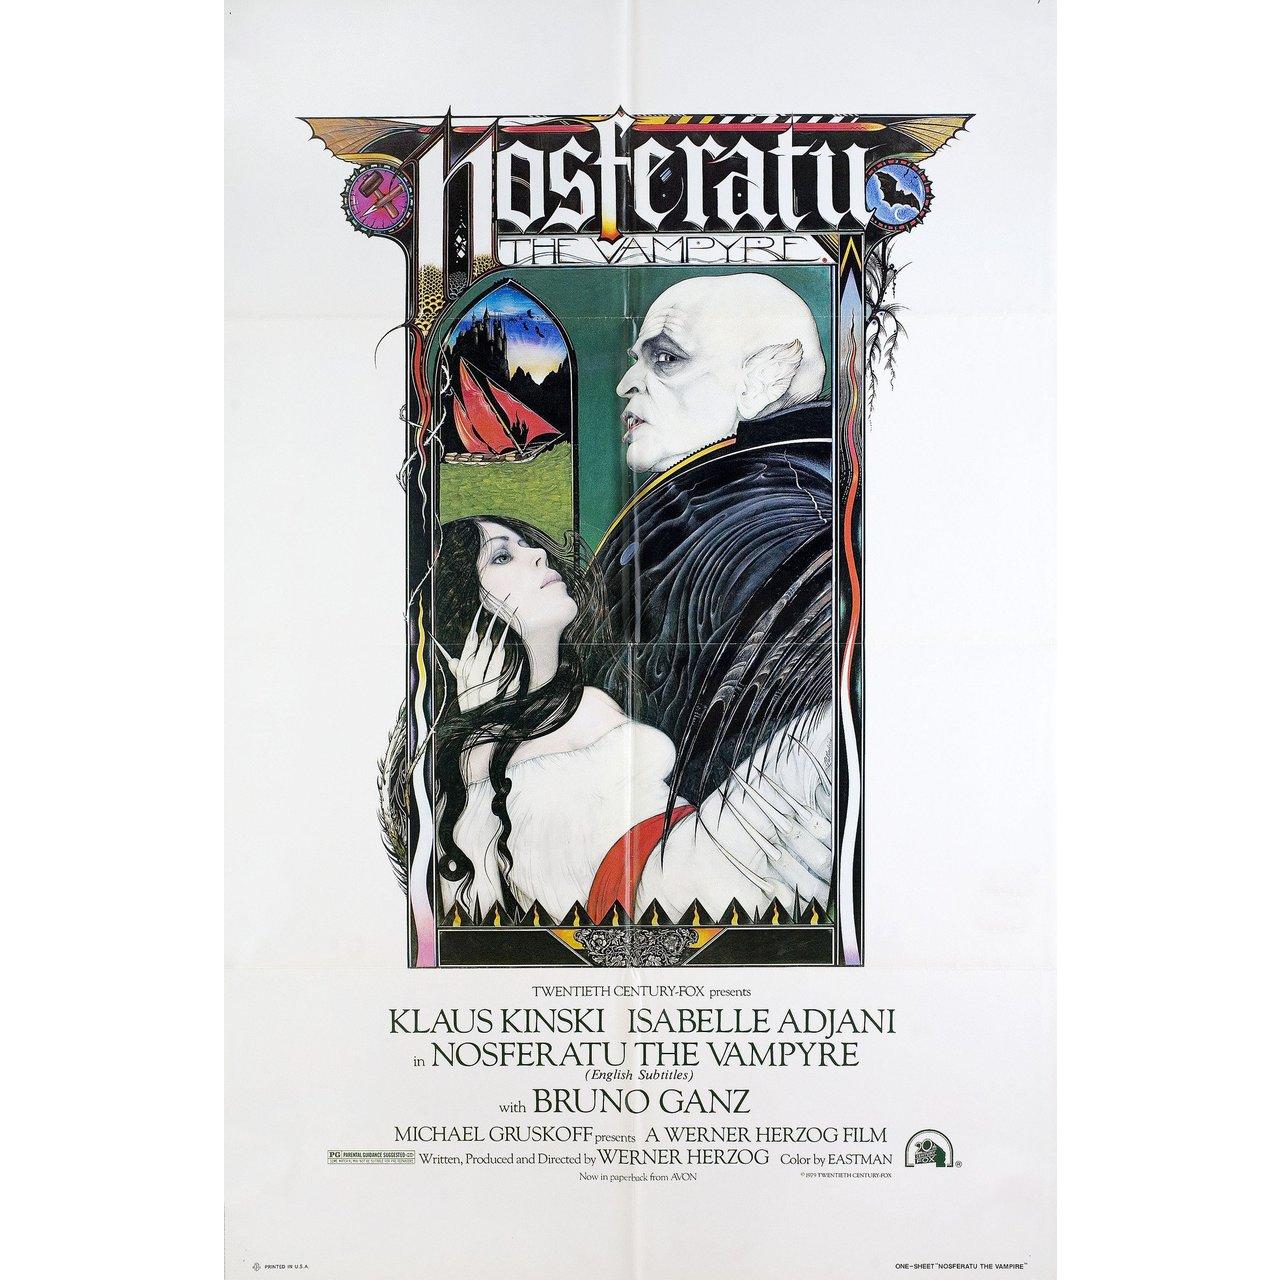 Original 1979 U.S. one sheet poster by David Palladini for the film Nosferatu the Vampyre (Nosferatu: Phantom der Nacht) directed by Werner Herzog with Klaus Kinski / Isabelle Adjani / Bruno Ganz / Roland Topor. Very good fine condition, folded.